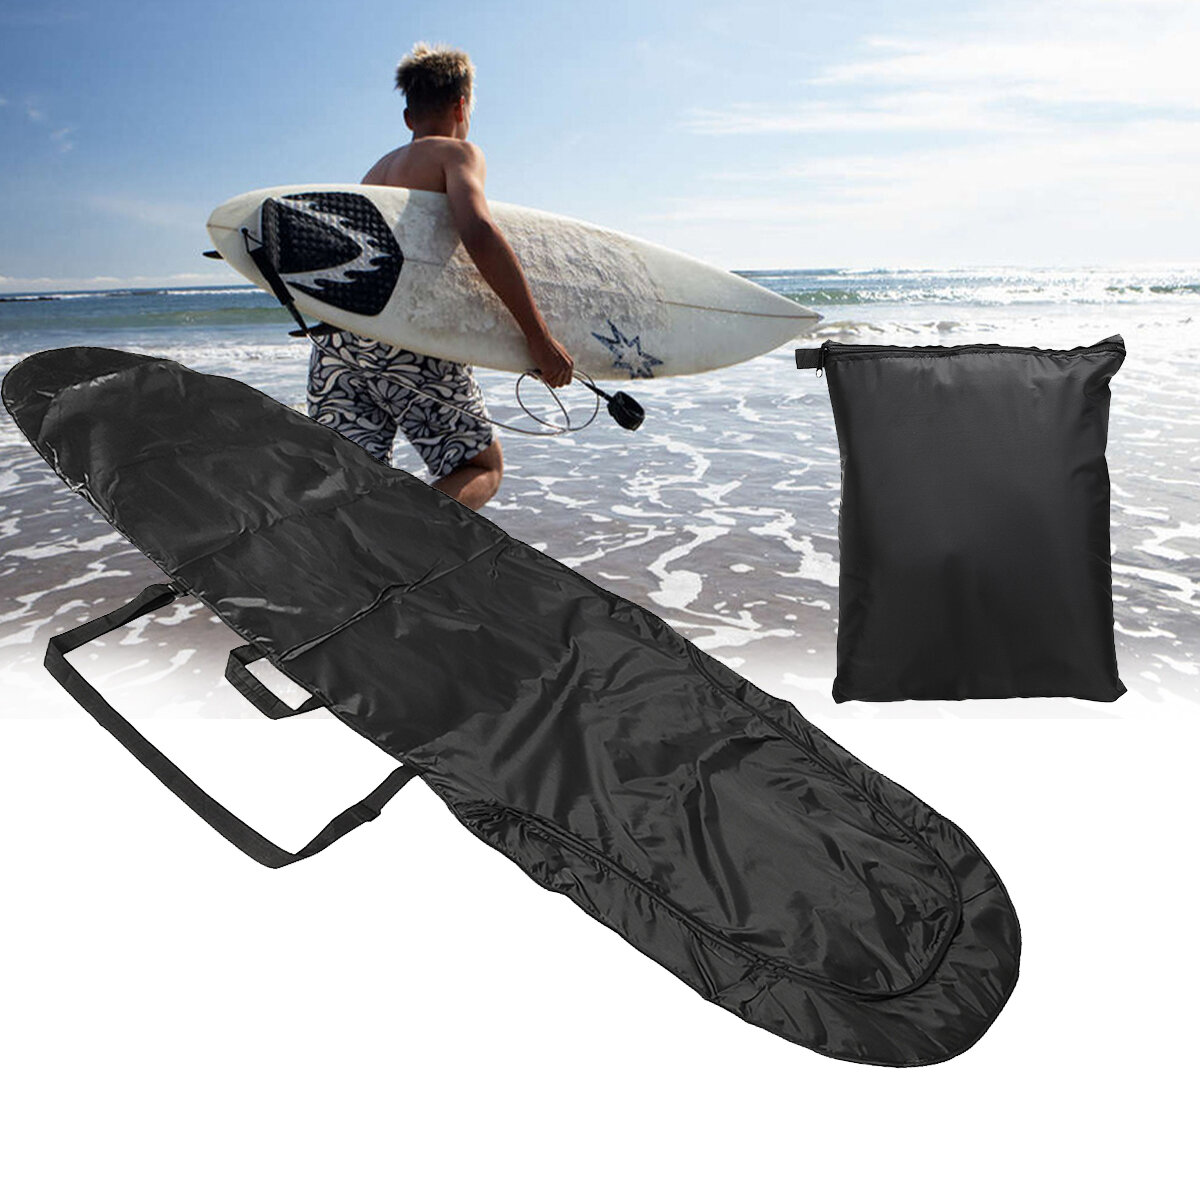 Surfboard Bag Protector 210D Oxford Fabric Waterproof Dustproof Surfboard Storage Bag for 6-8 inch Surfboards